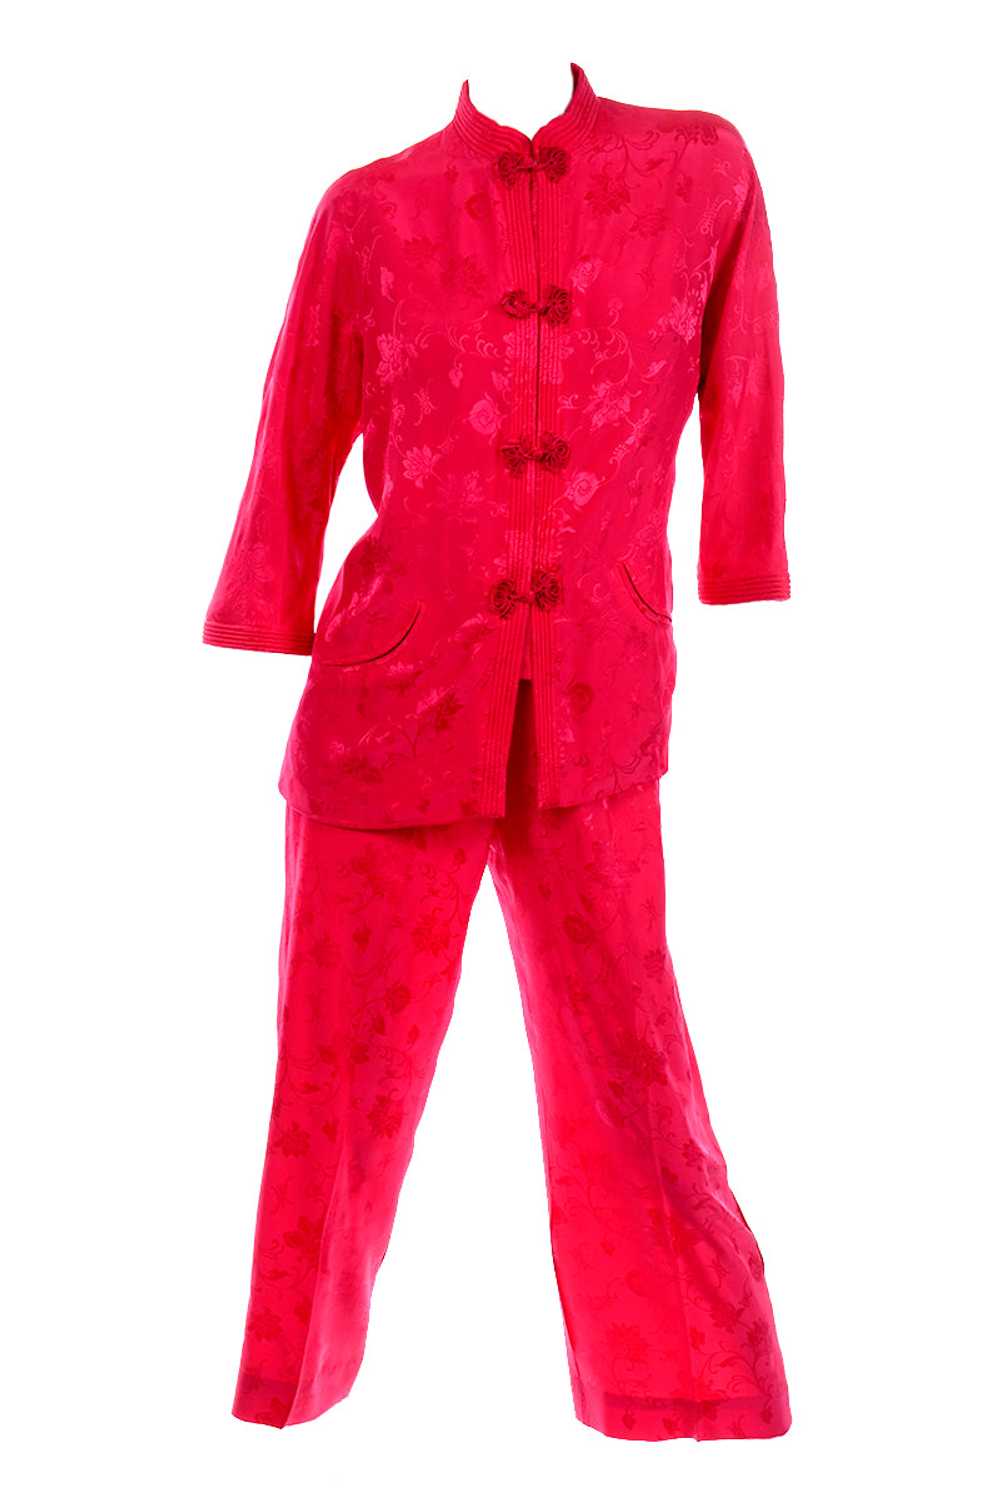 1960s Dynasty Red Silk Floral Pajamas - image 1